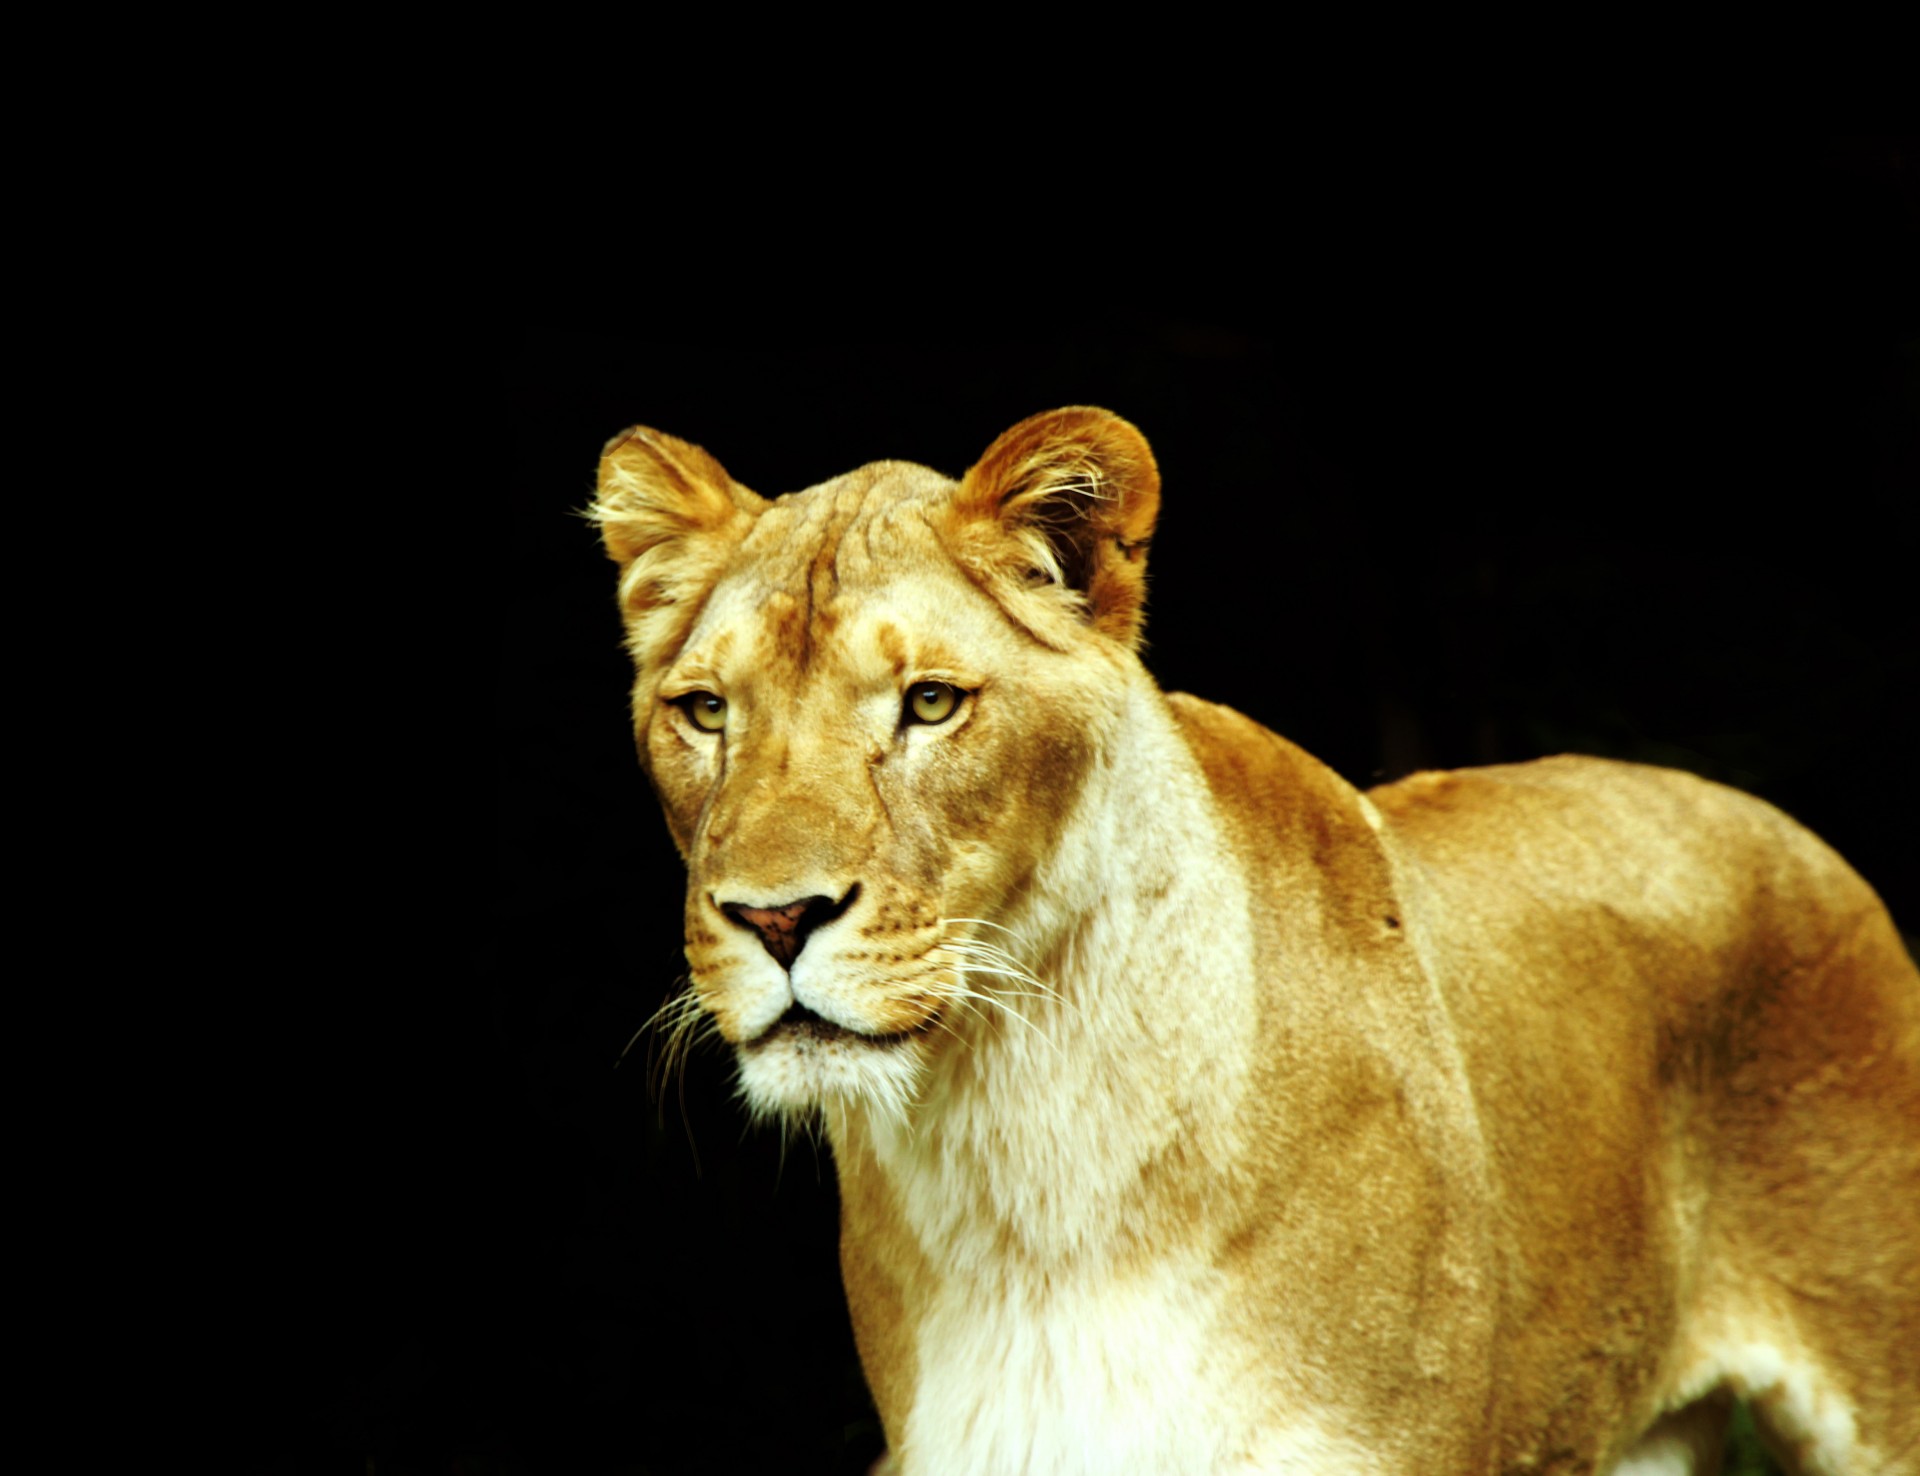 Lioness Lion Big Cat Feline Africa Photo From Needpix